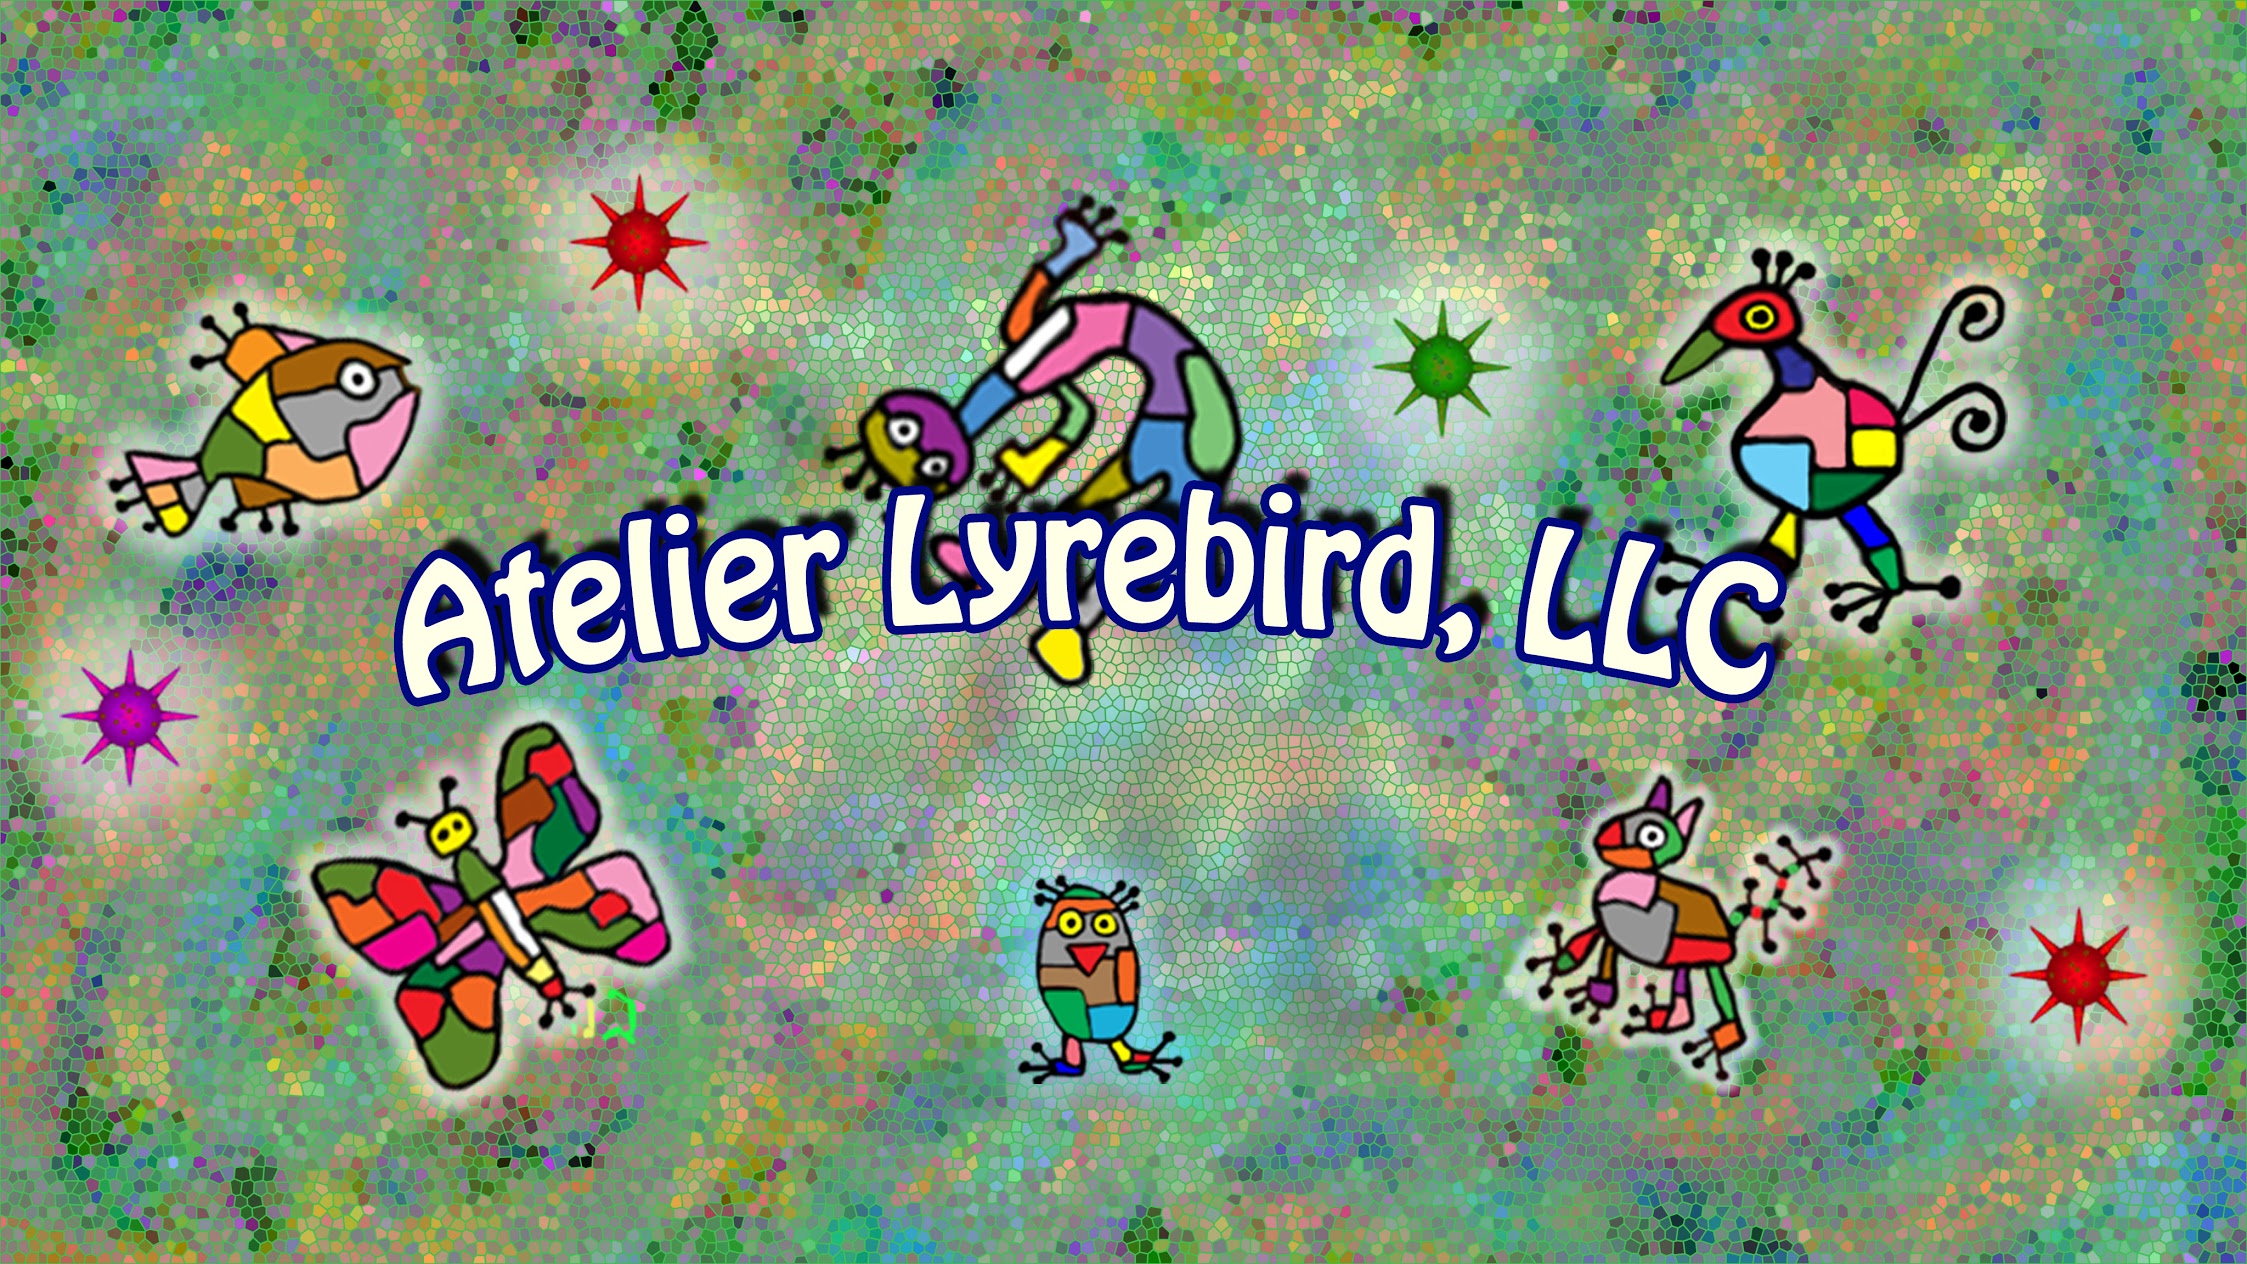 Atelier Lyrebird, LLC